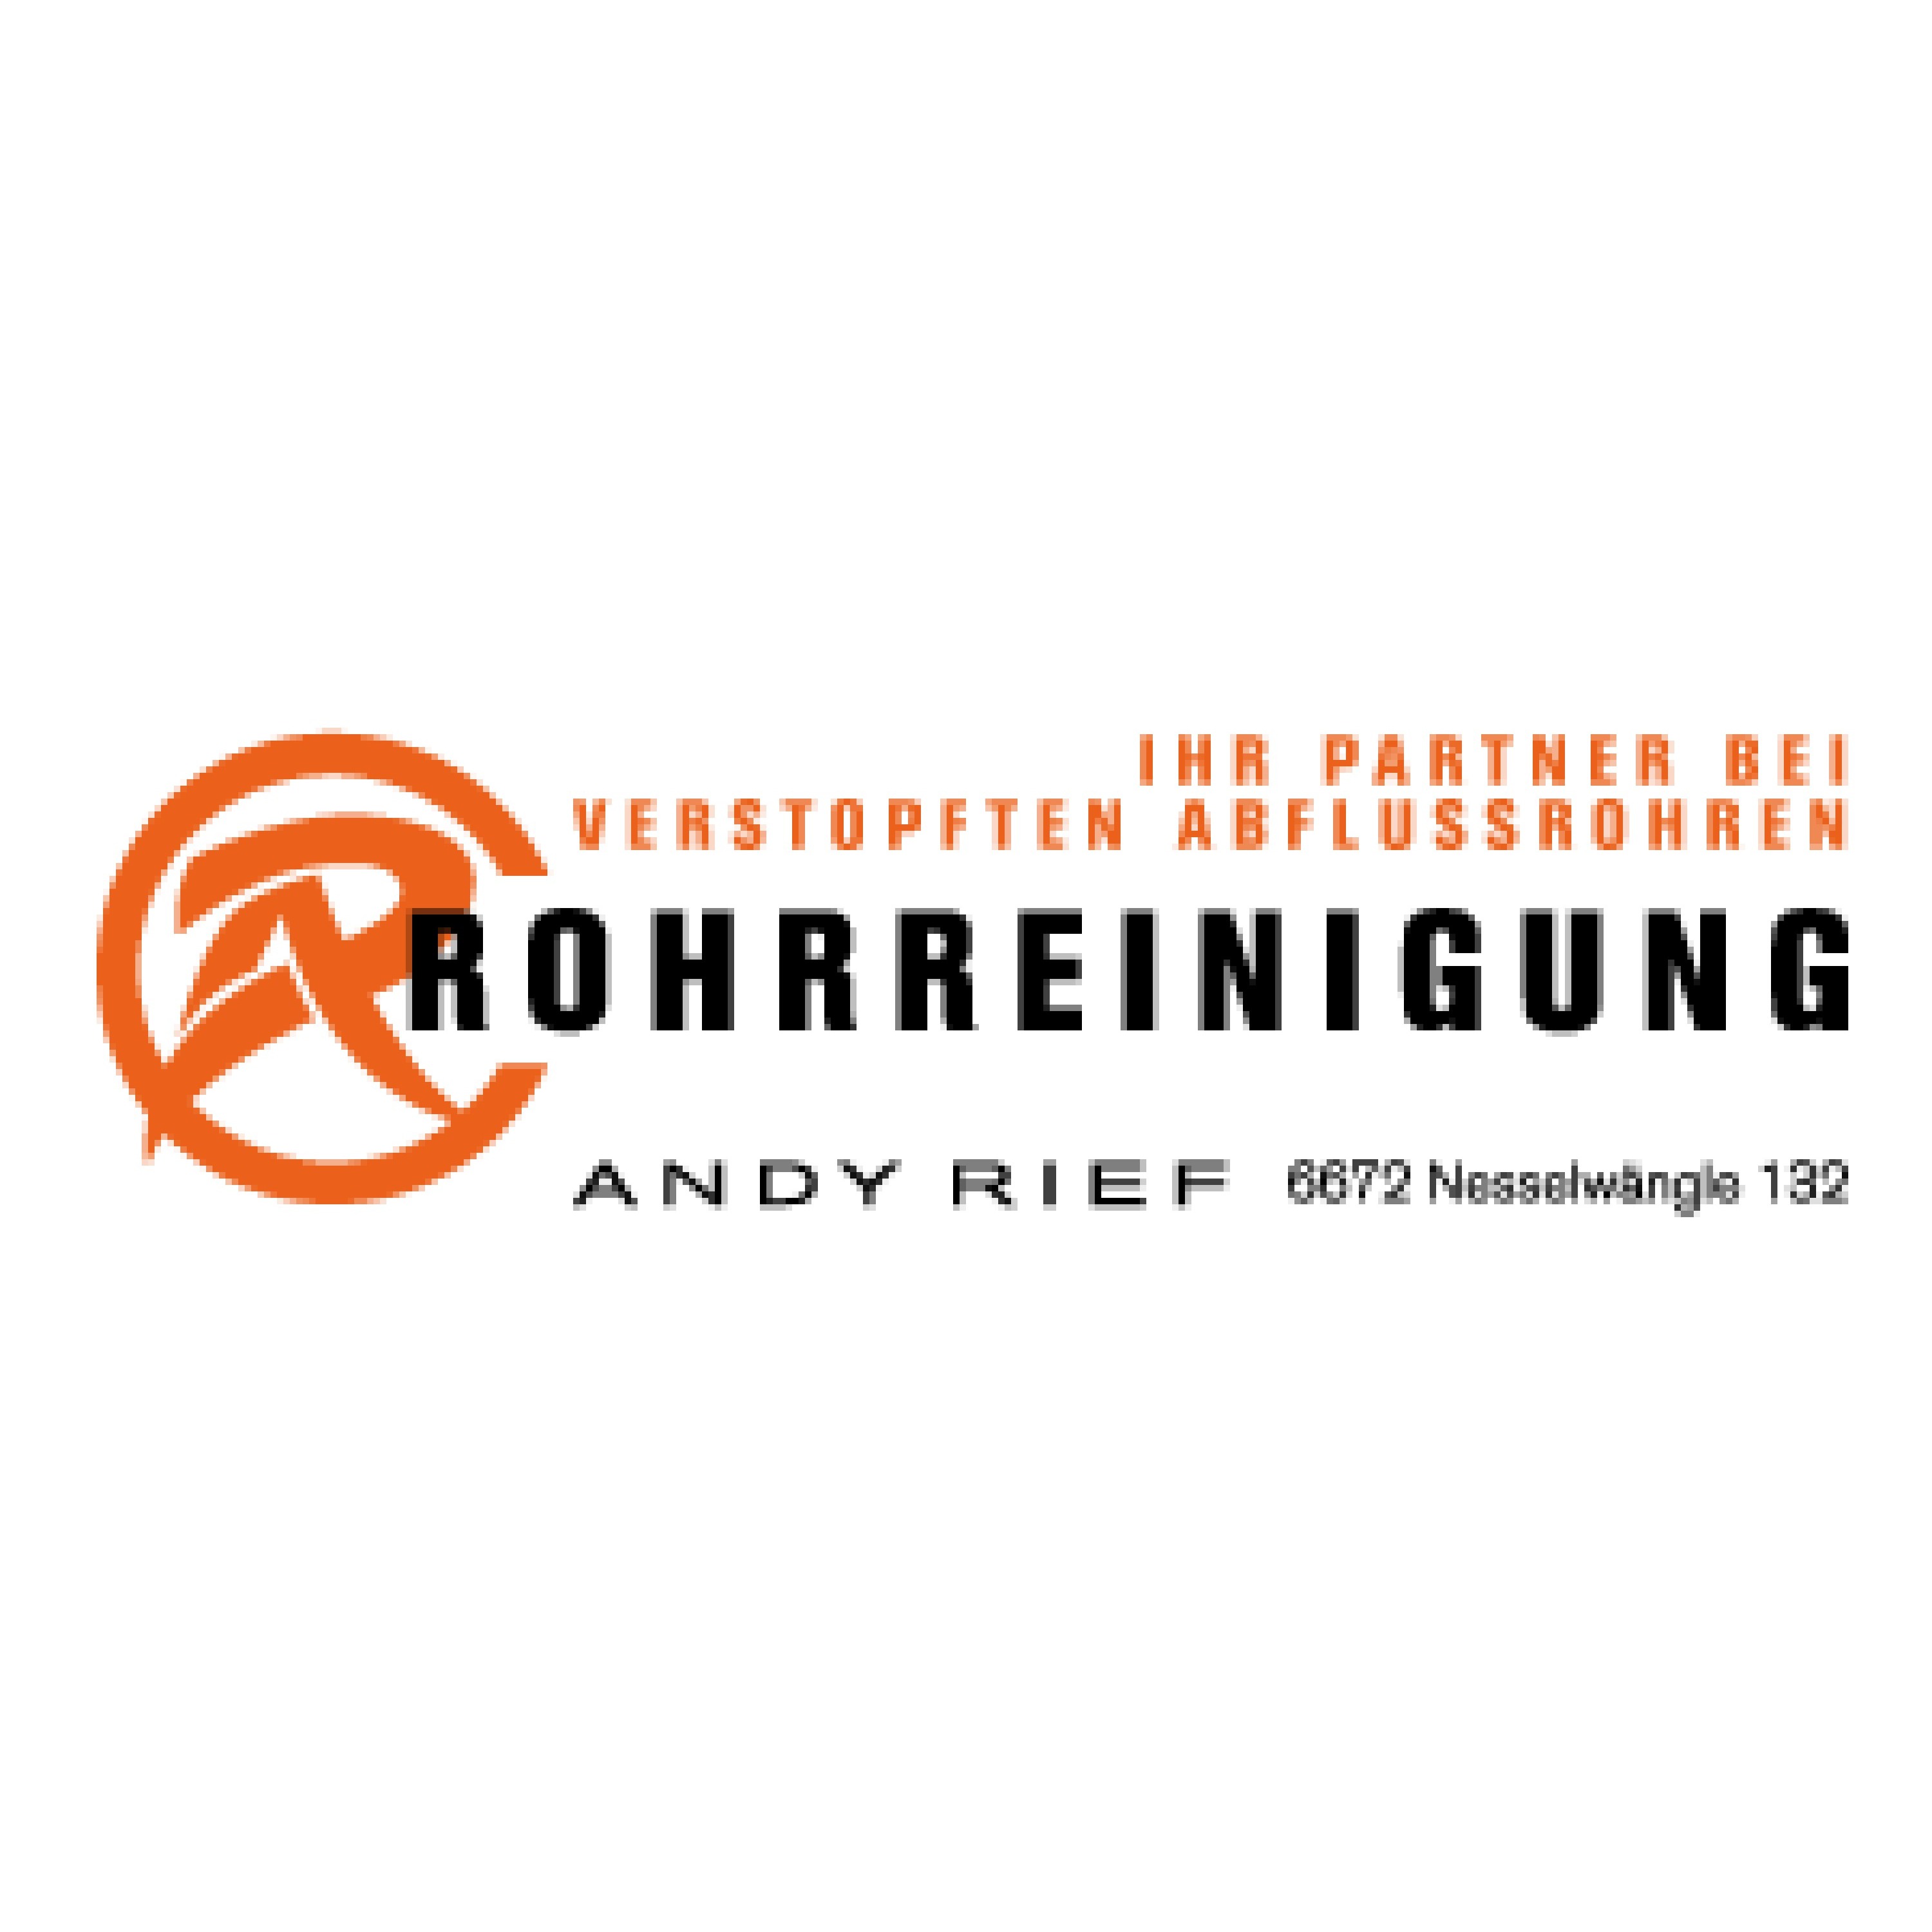 Andy Rief Rohrreinigung Logo